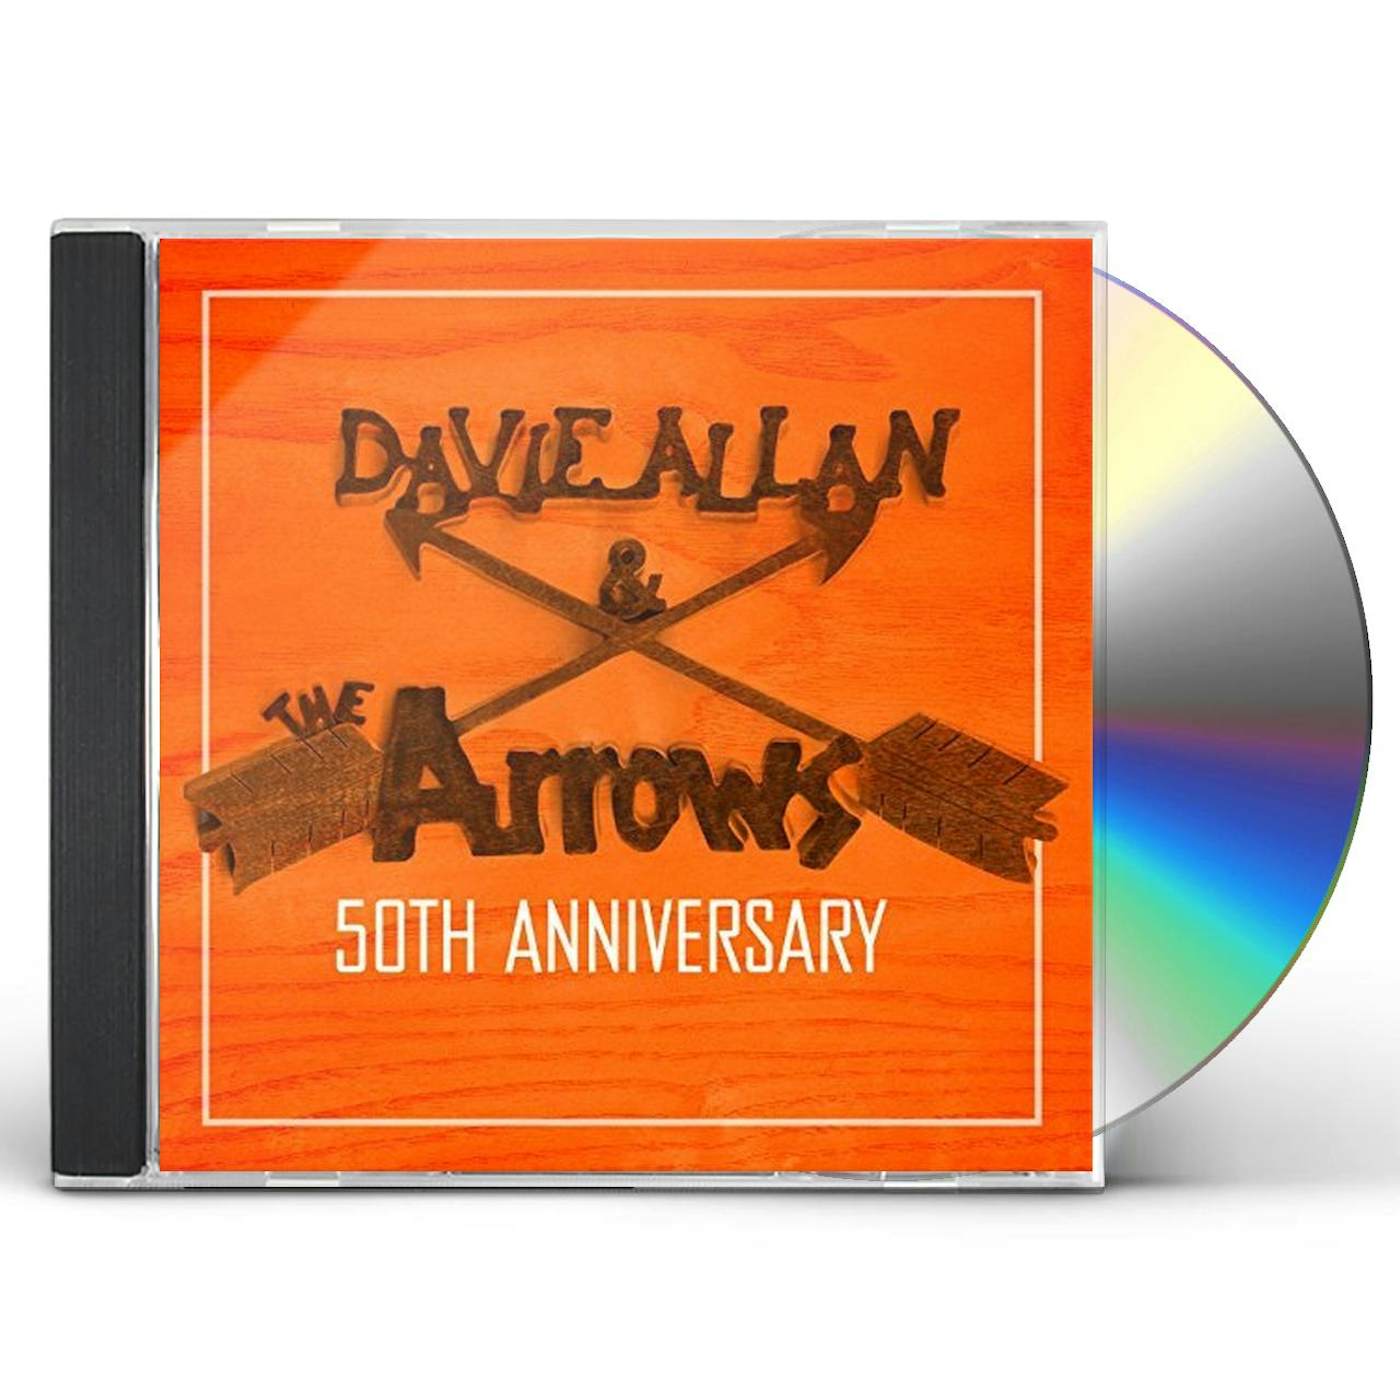 Davie Allan & The Arrows 50TH ANNIVERSARY CD